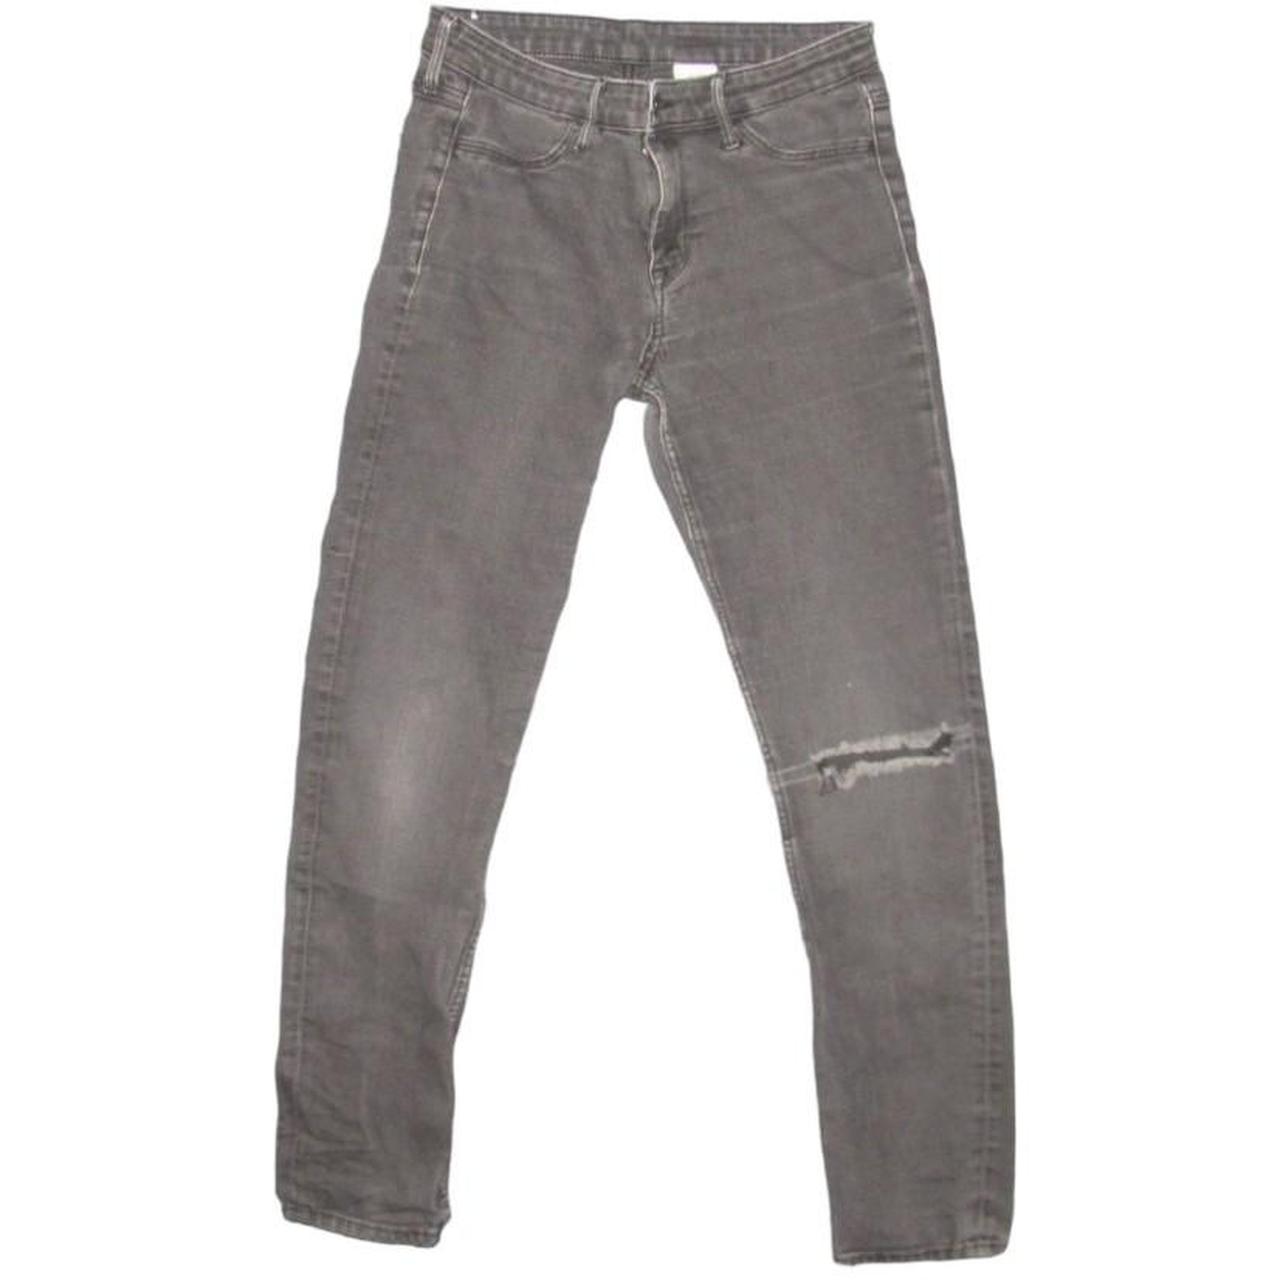 gray Skinny jeans BY: H&M RN:101255 COLOR:... - Depop